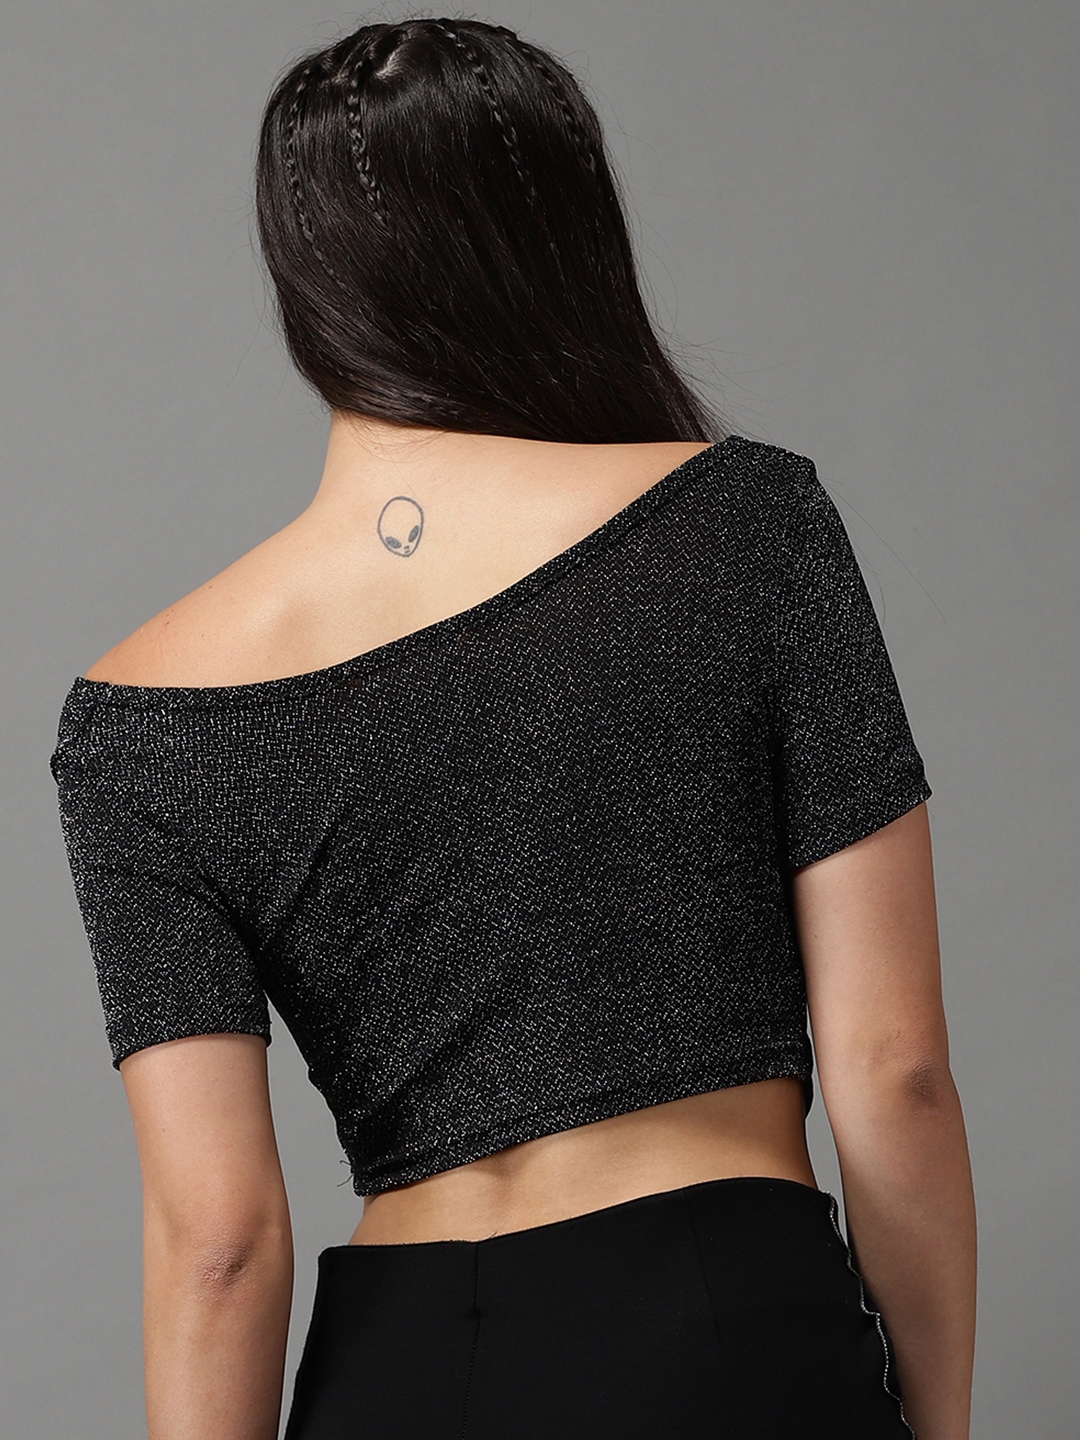 Women's Black Polyester Solid Crop Top